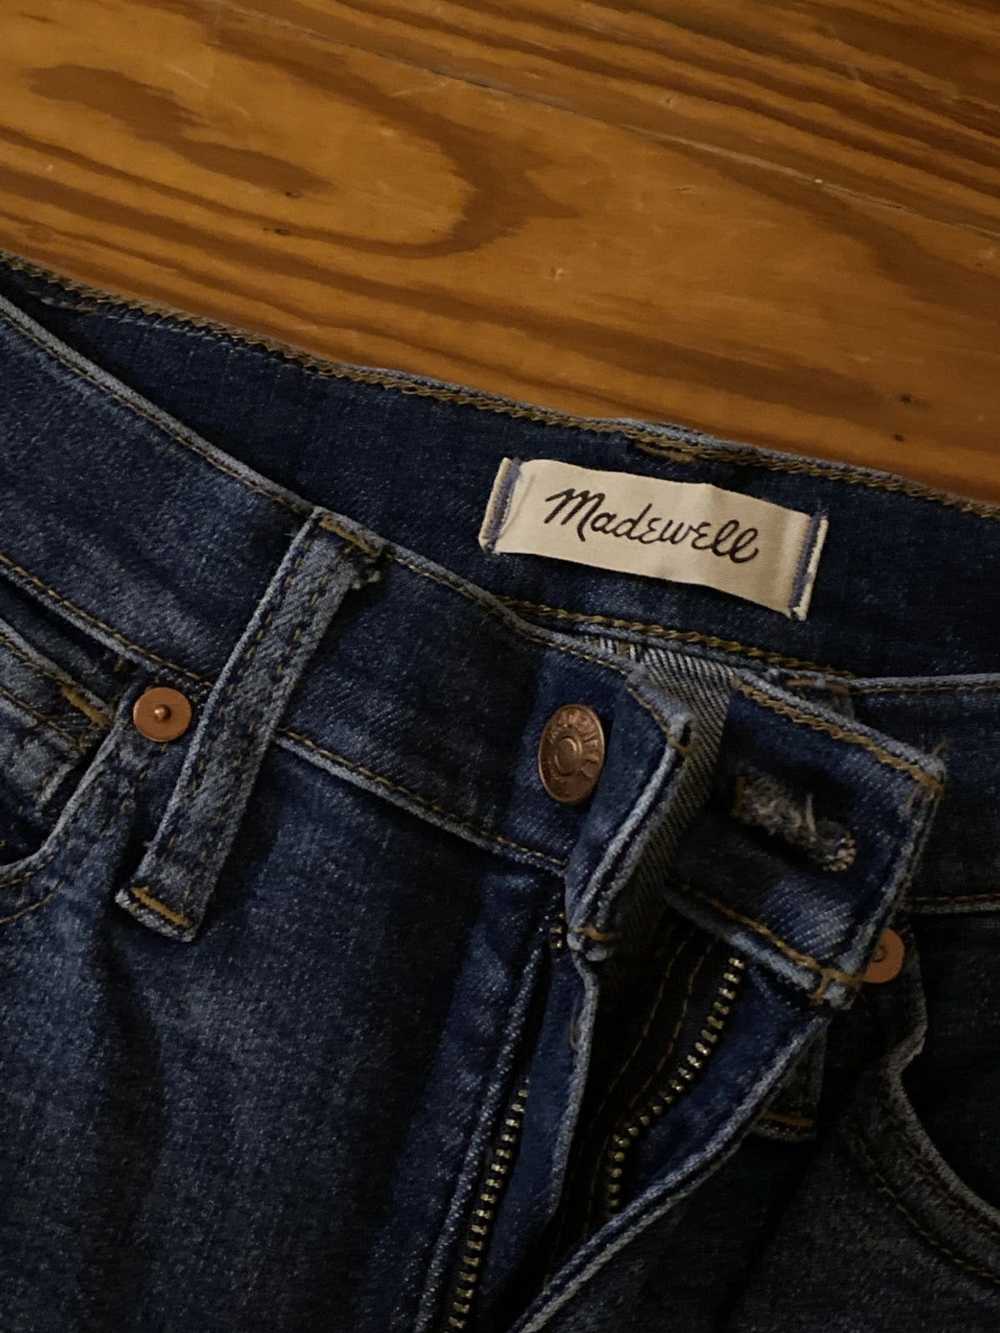 Madewell Madewell High Waisted Jeans - image 2